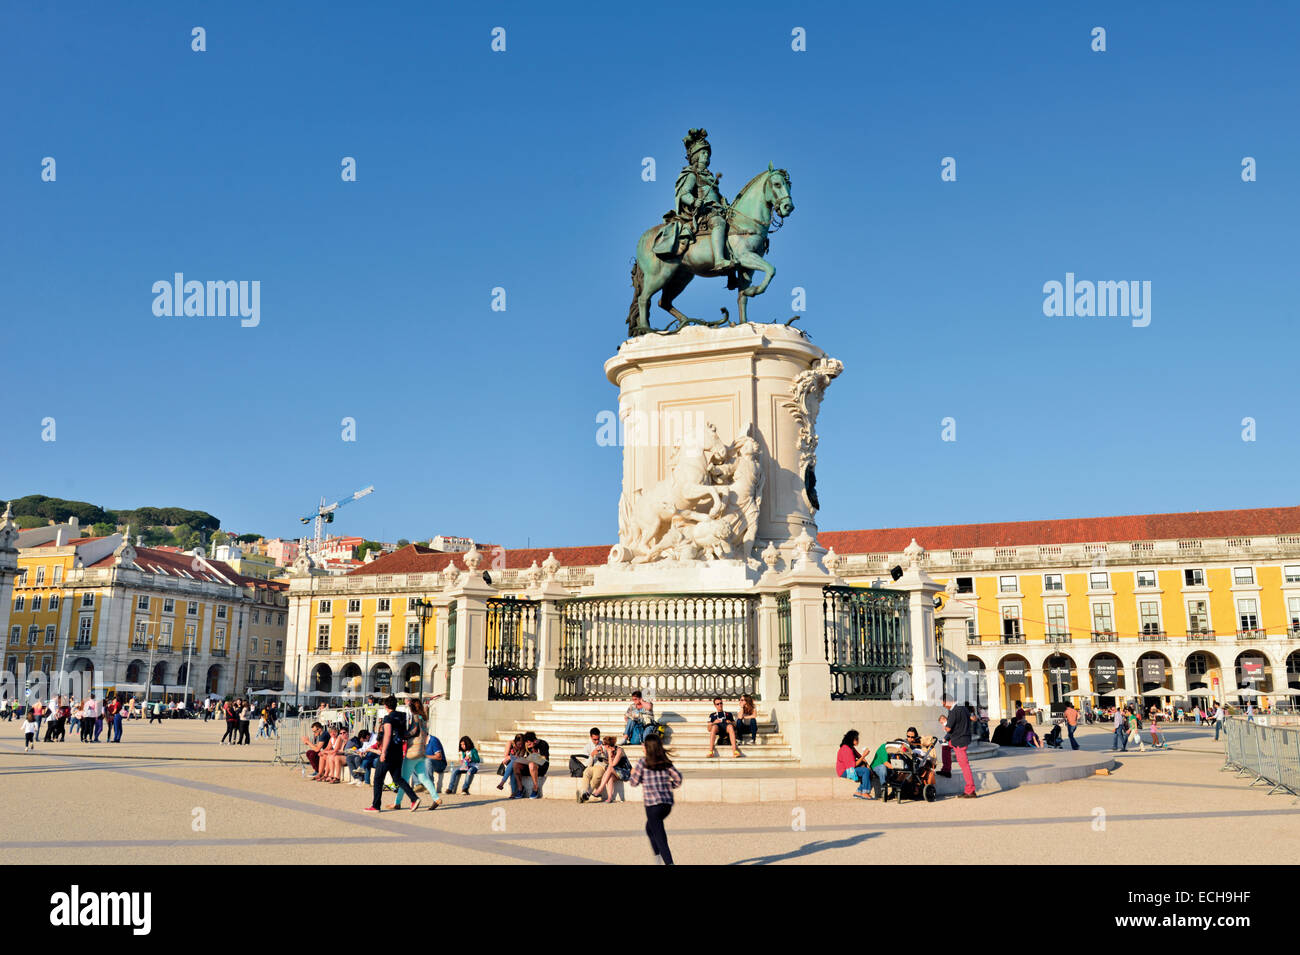 Portugal, Lisbon: People enjoying sun at the town square Praca do Comercio Stock Photo